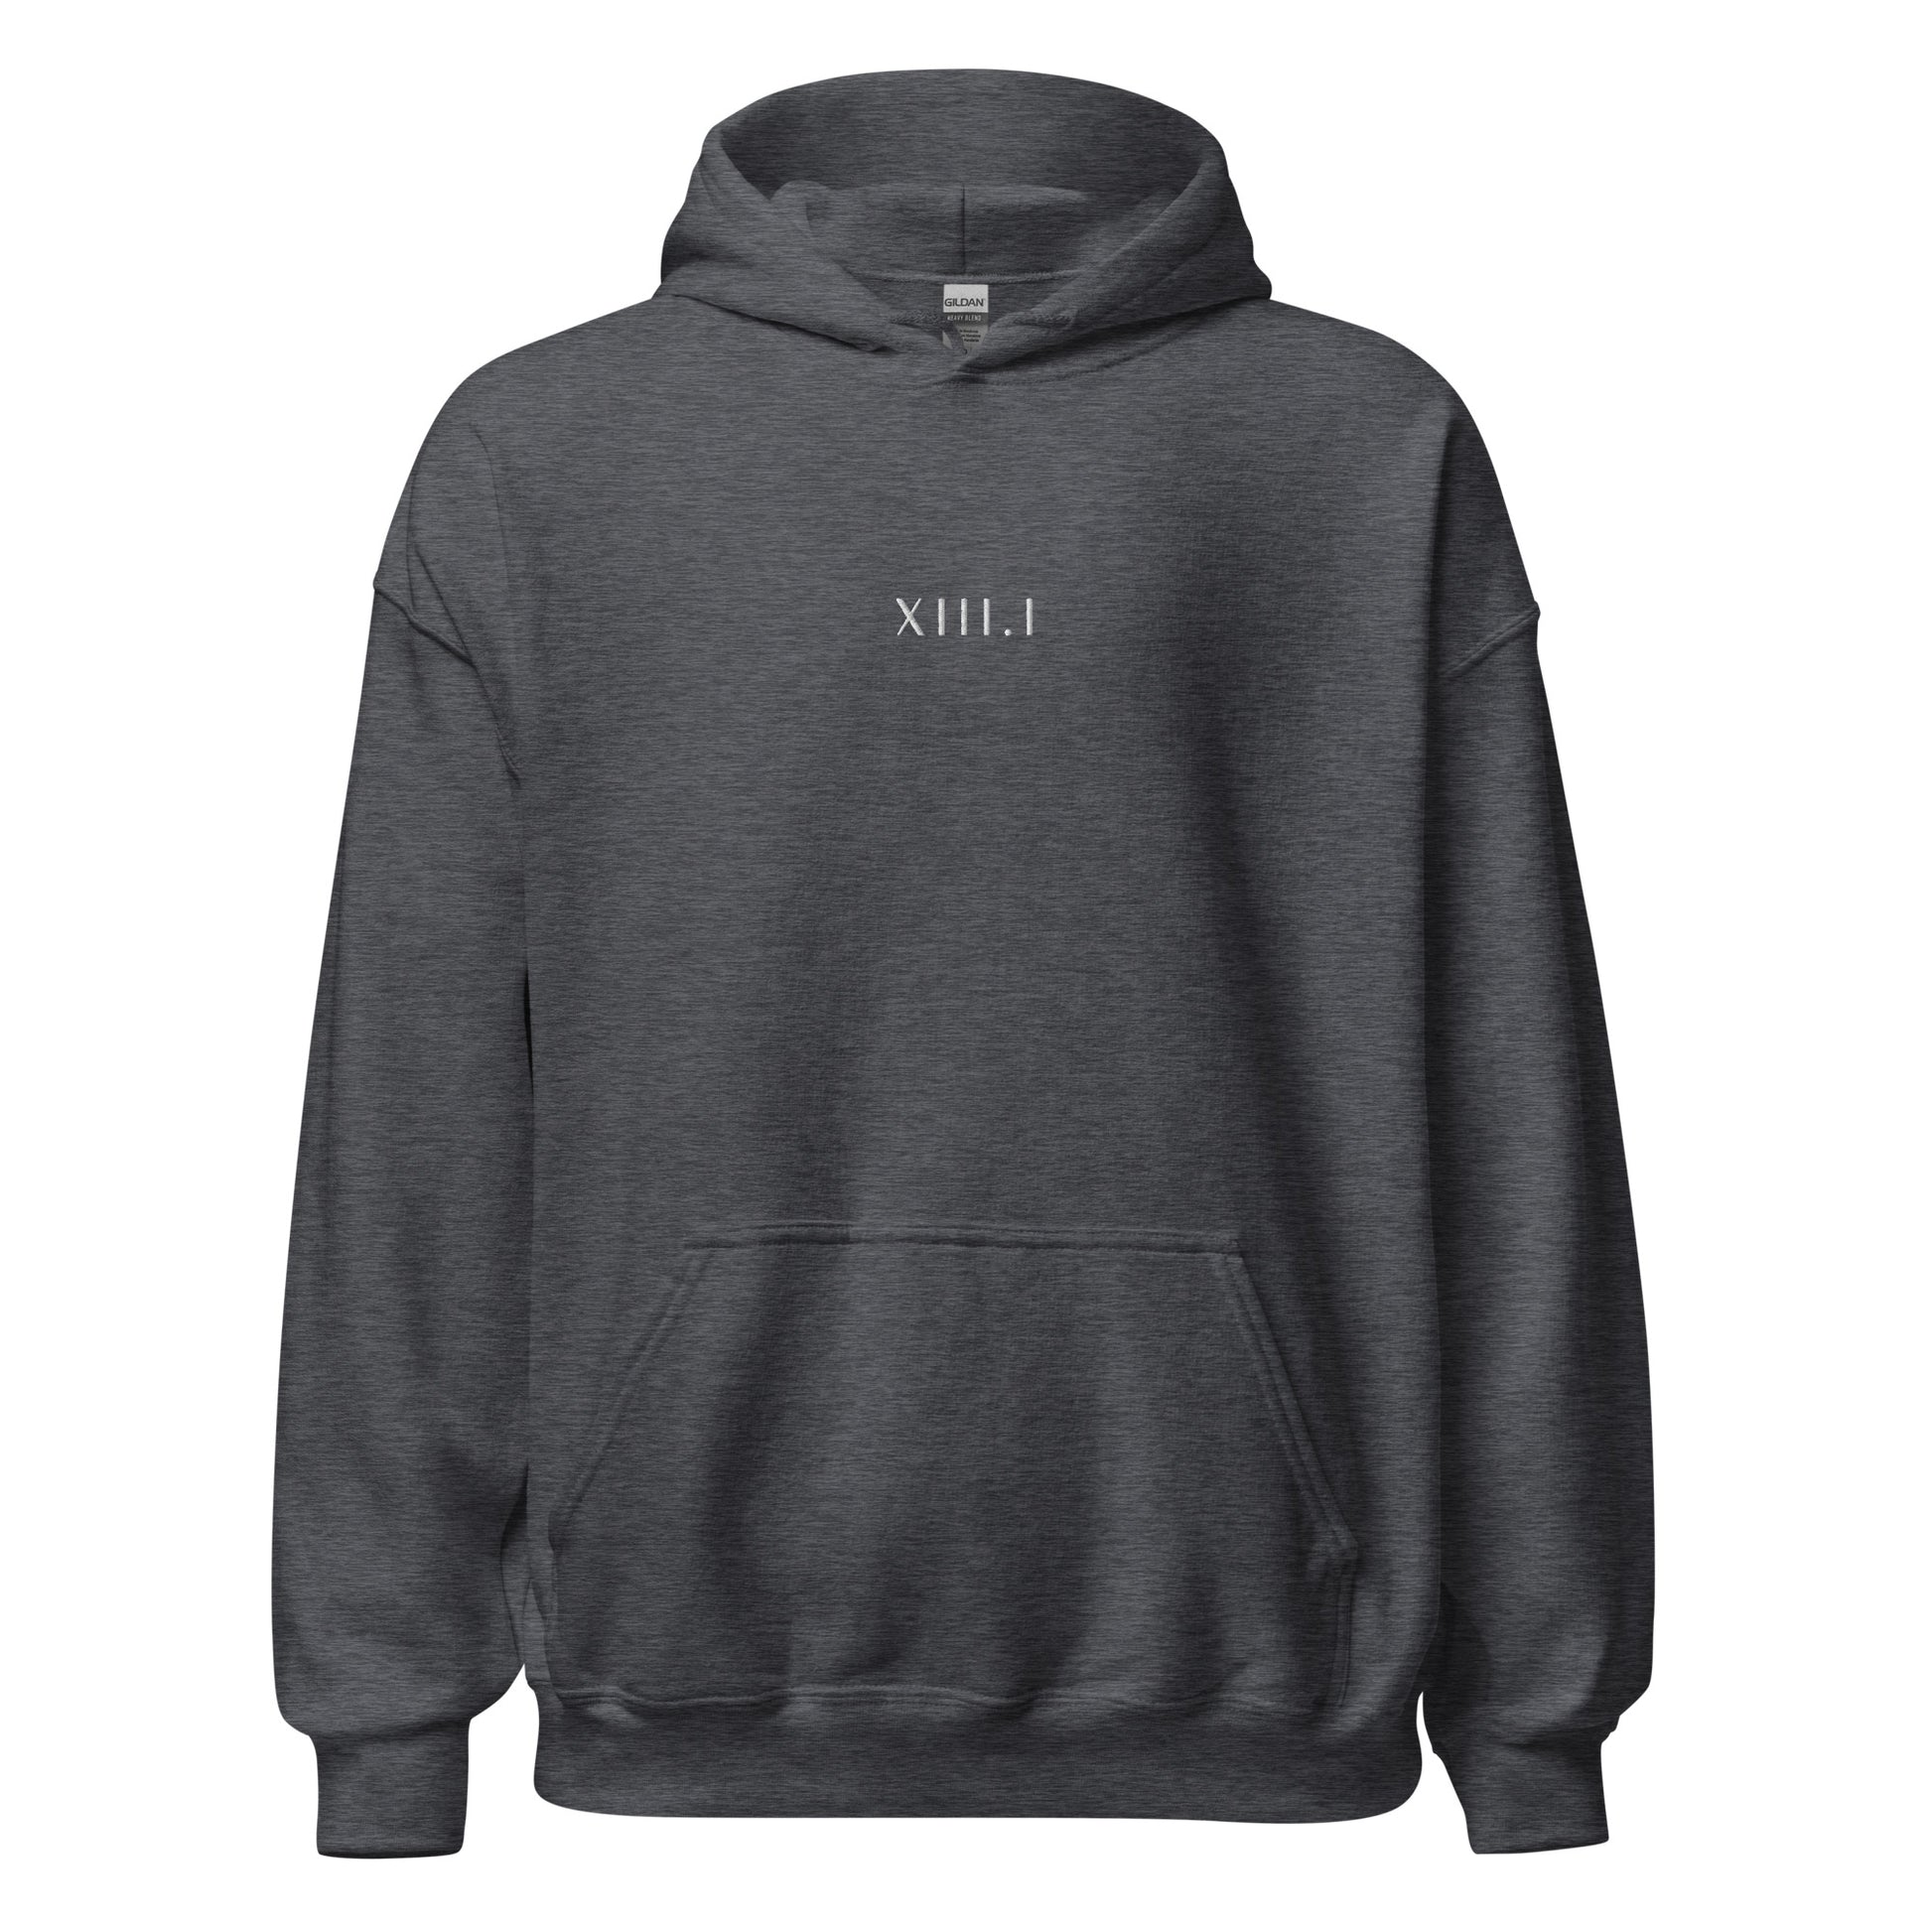 dark grey unisex hoodie with XIII.I 13.1 half marathon in roman numerals embroidered in white writing